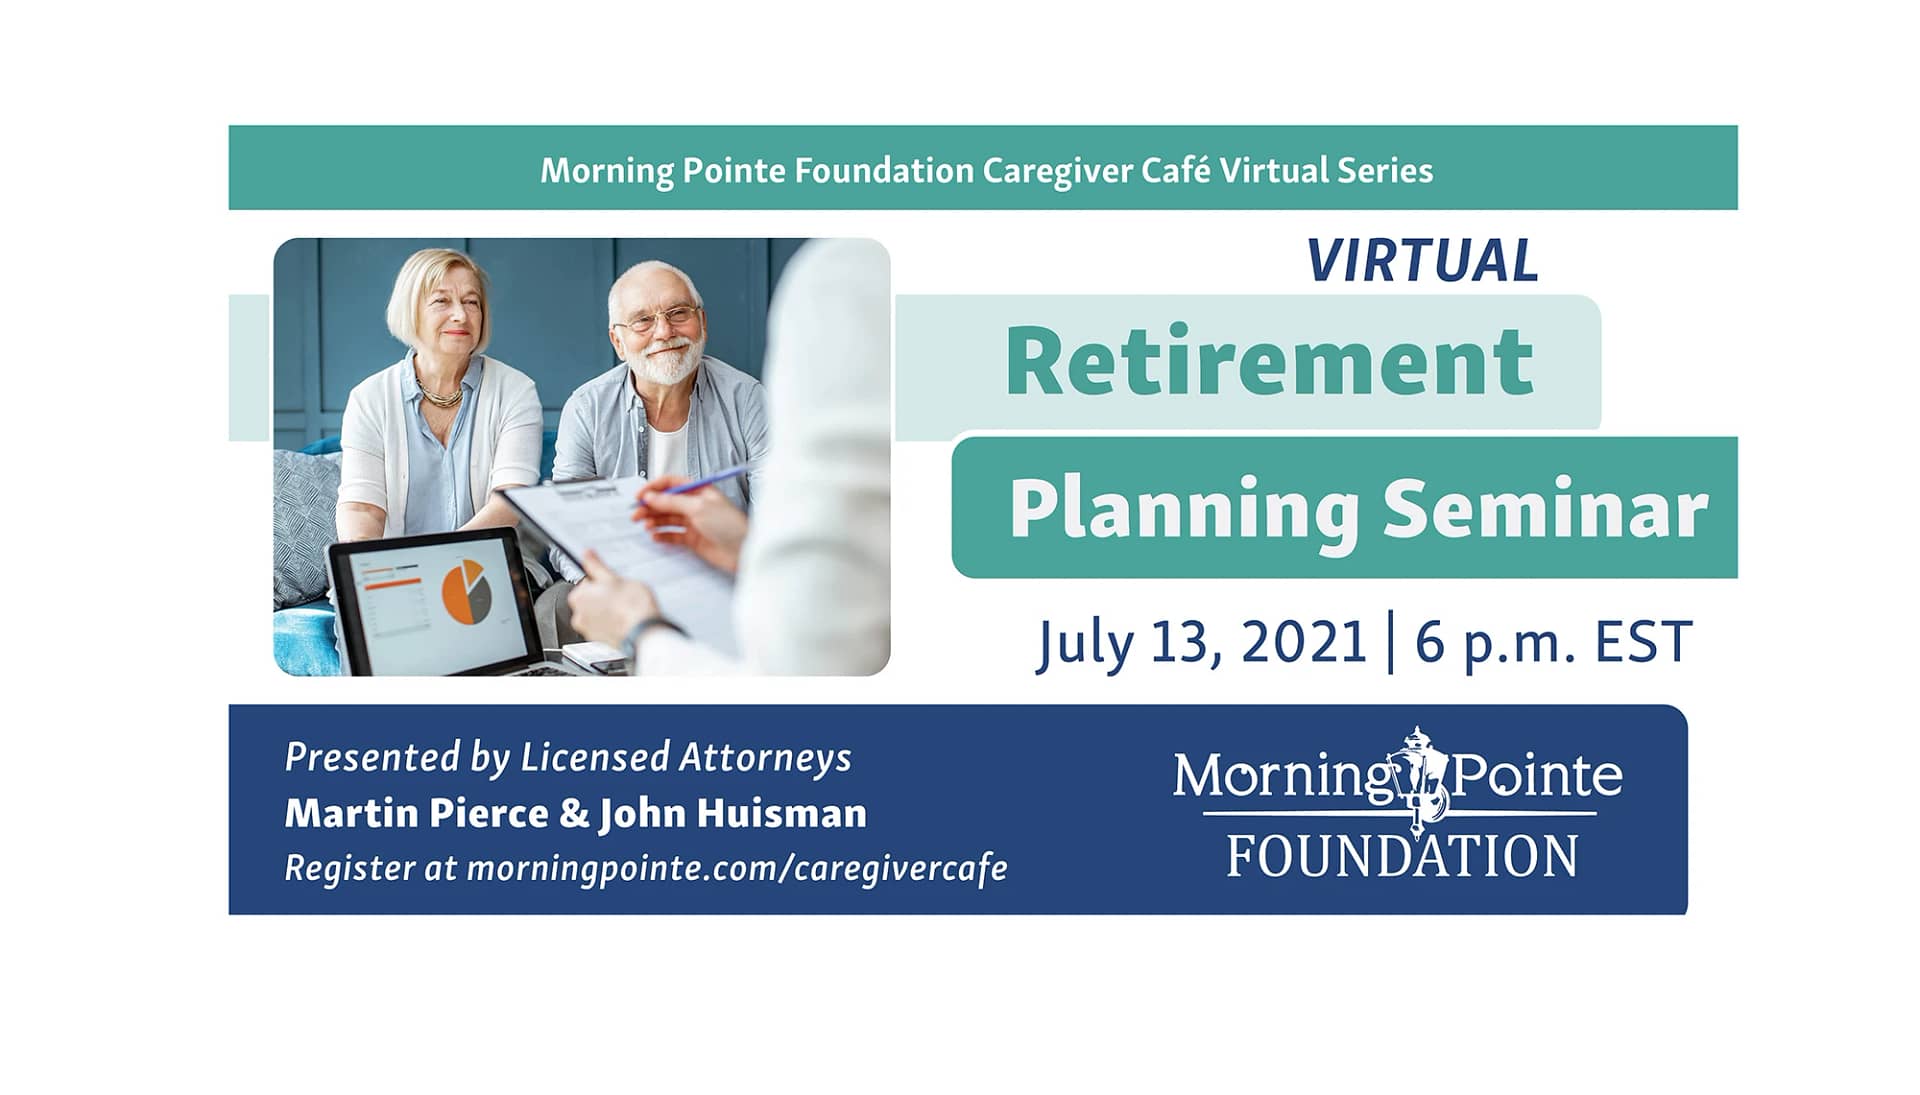 Virtual retirement planning seminar